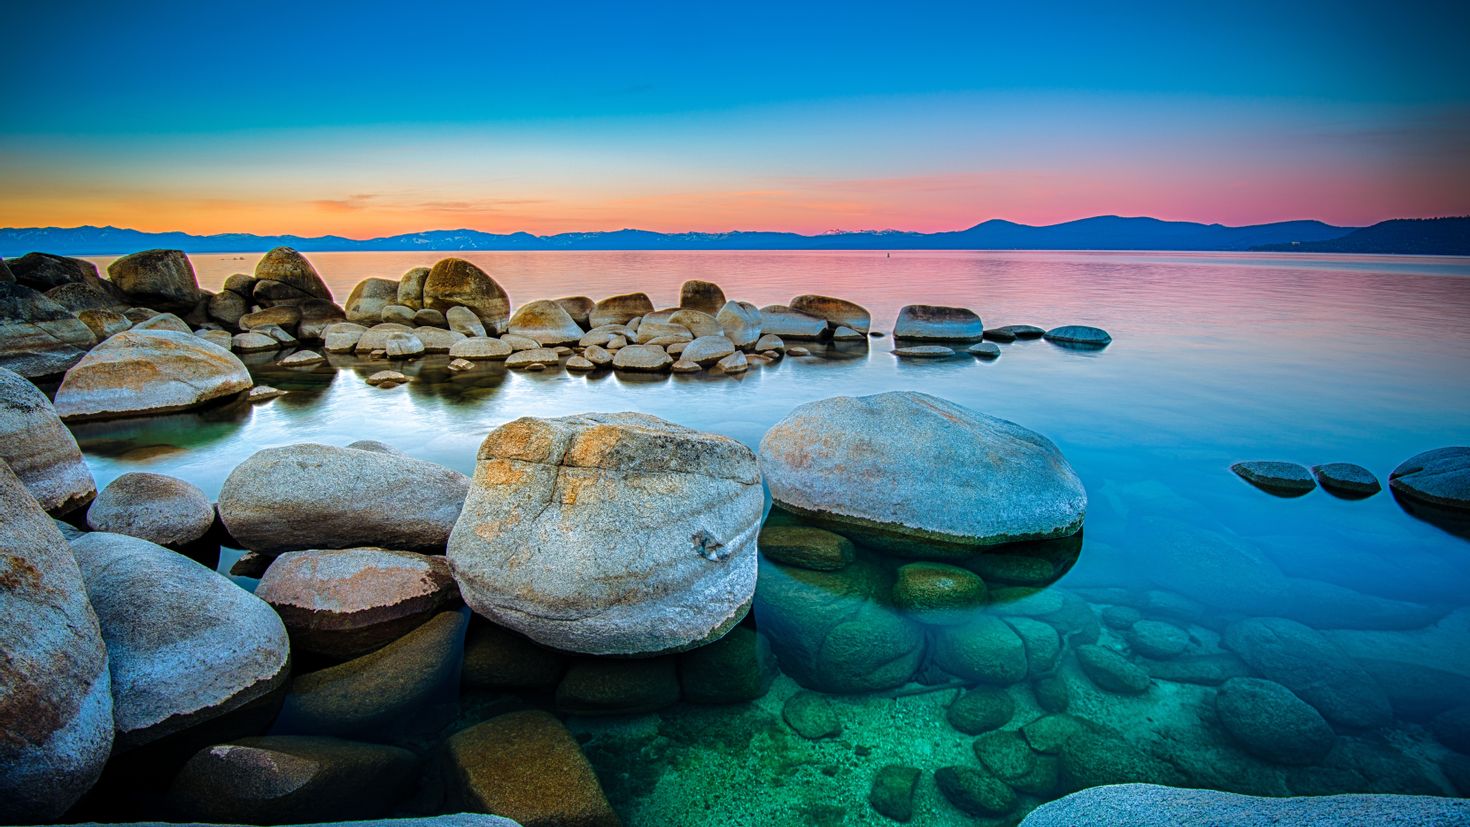 Камни в морской воде